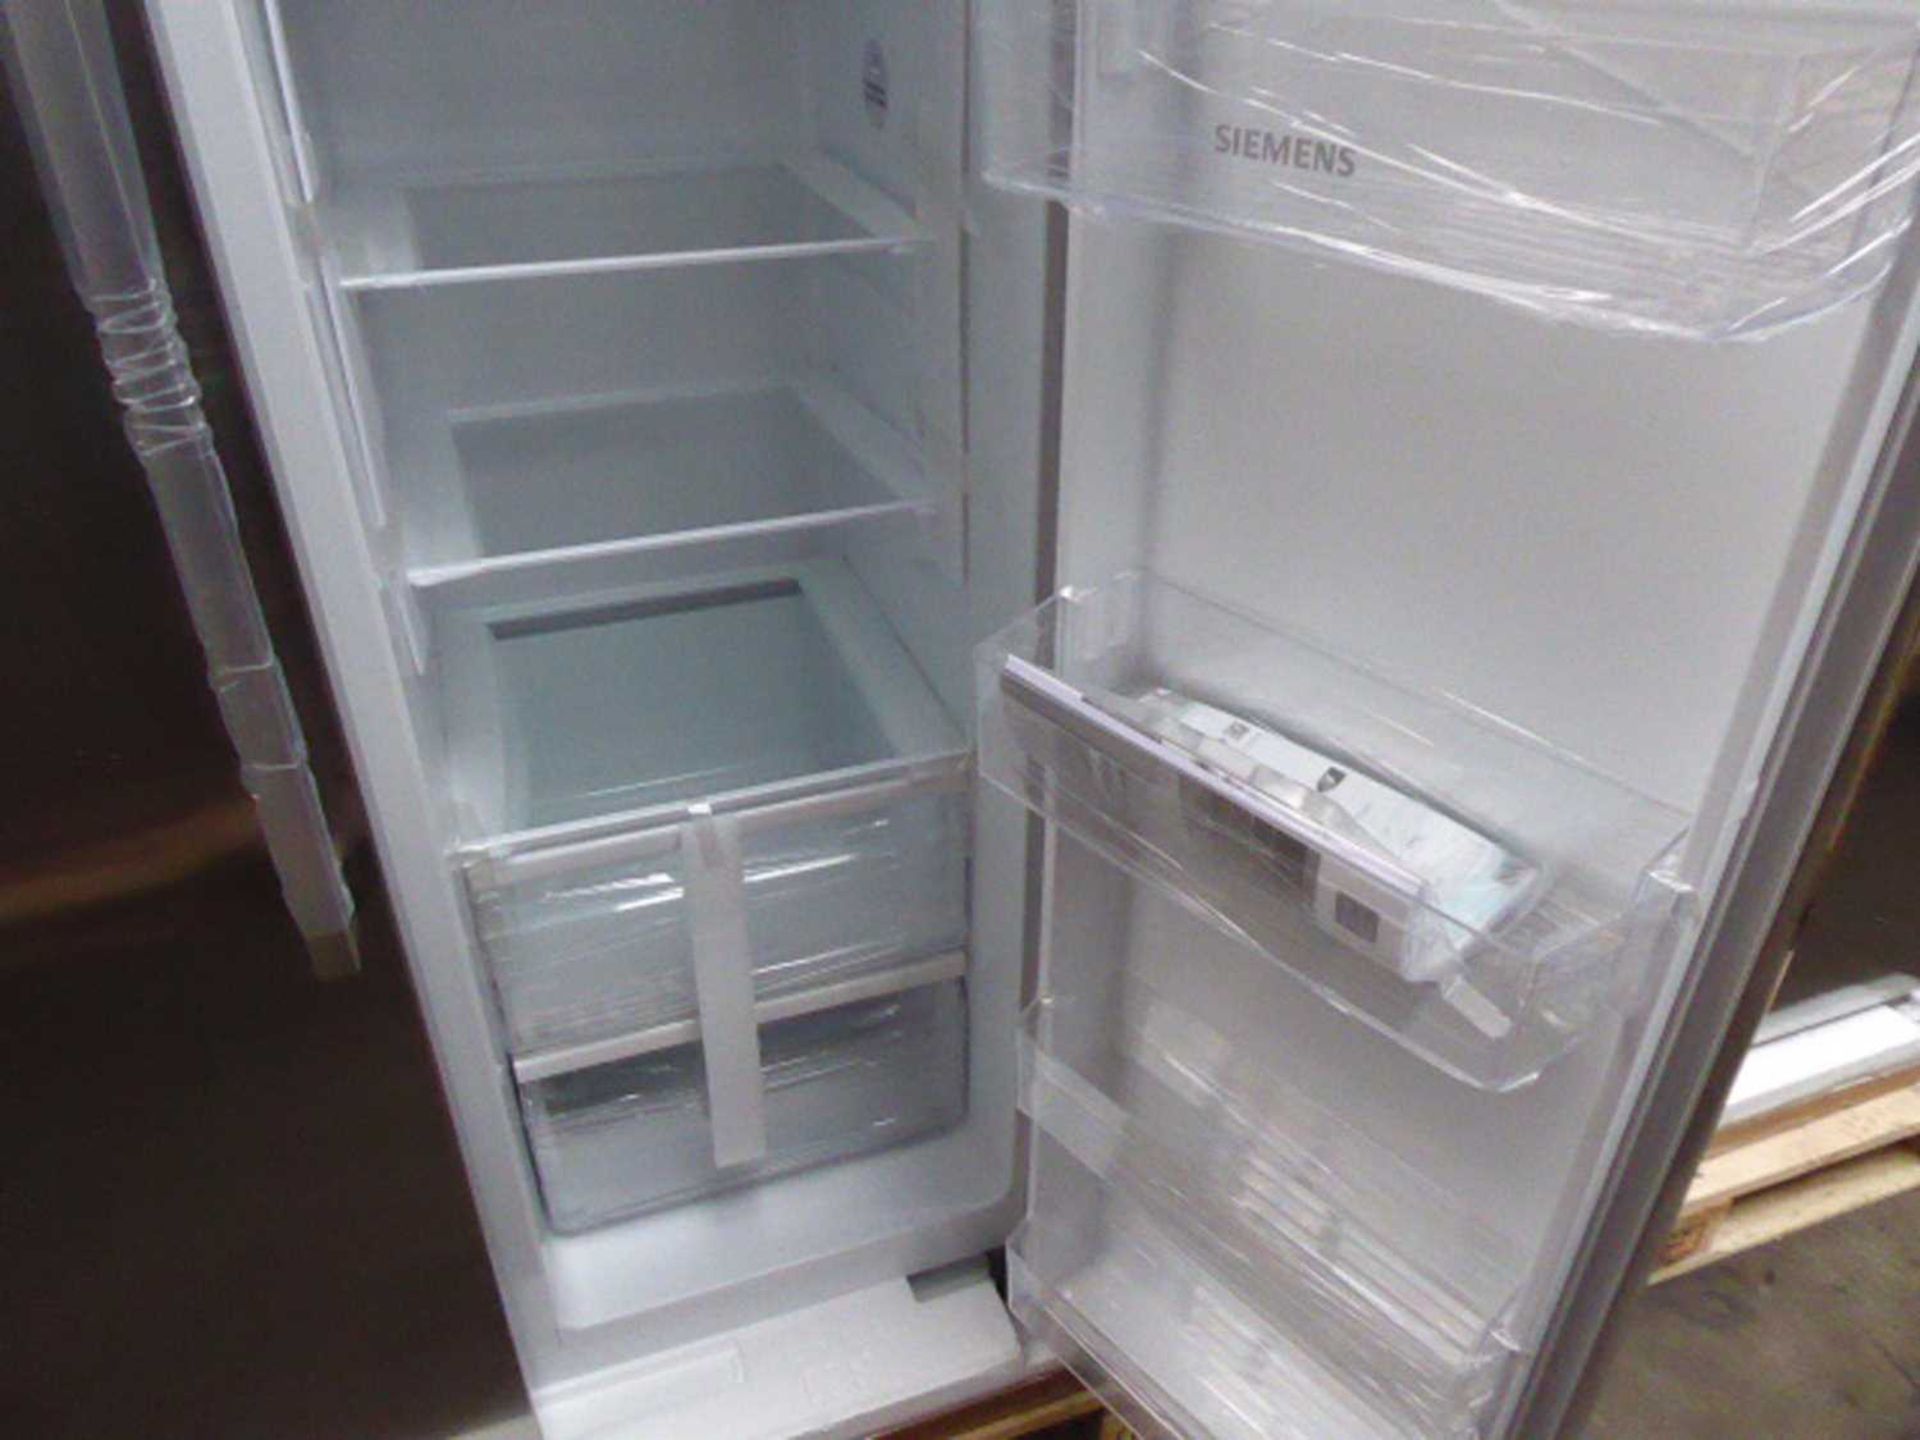 +VAT KA93NVIFP-B - Siemens - Side-by-side fridge-freezer - Image 2 of 2